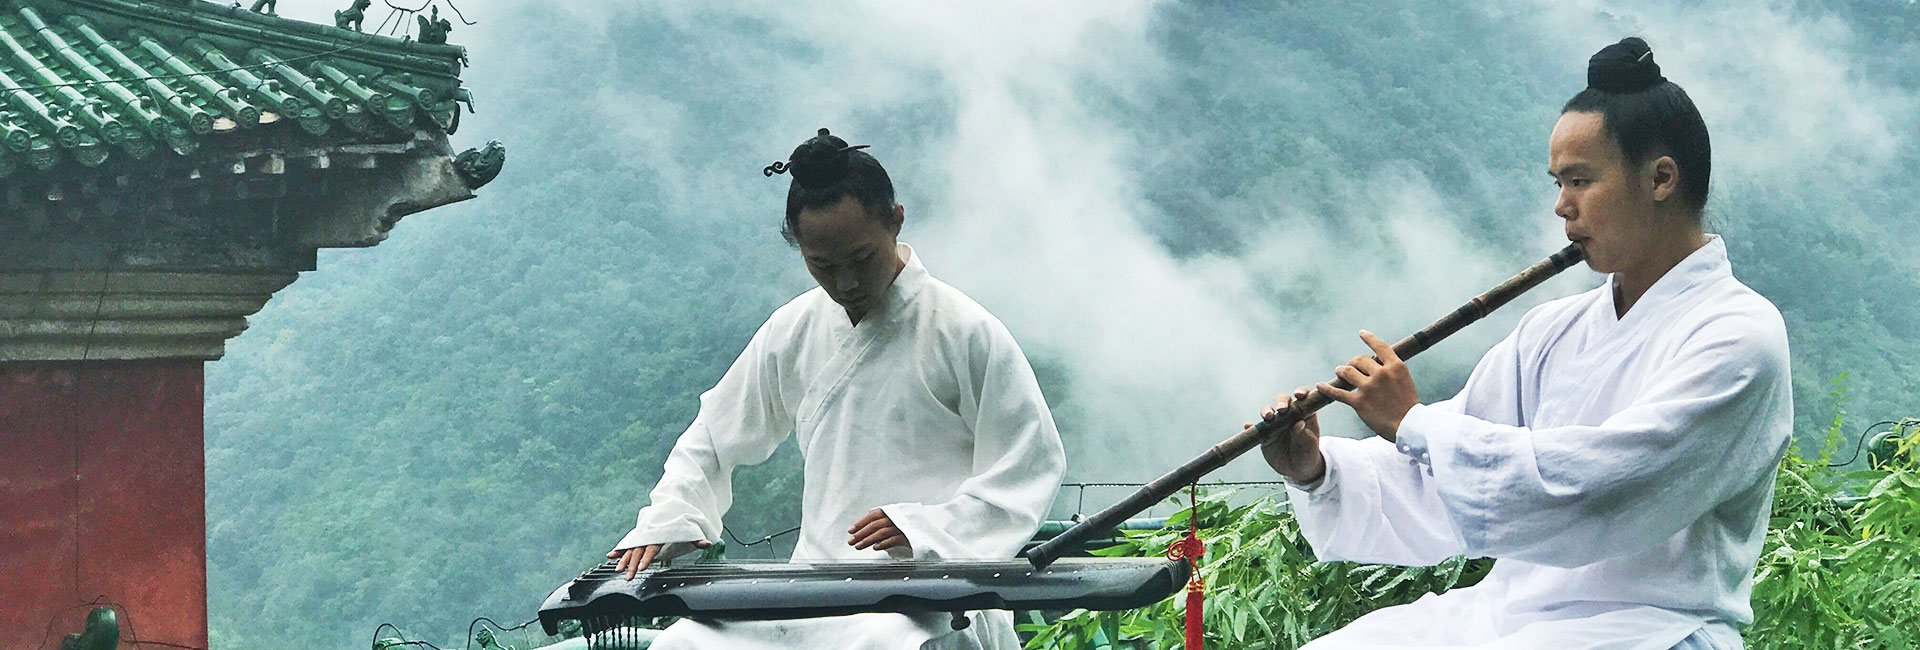 Wudang Mountain Taoism Tour